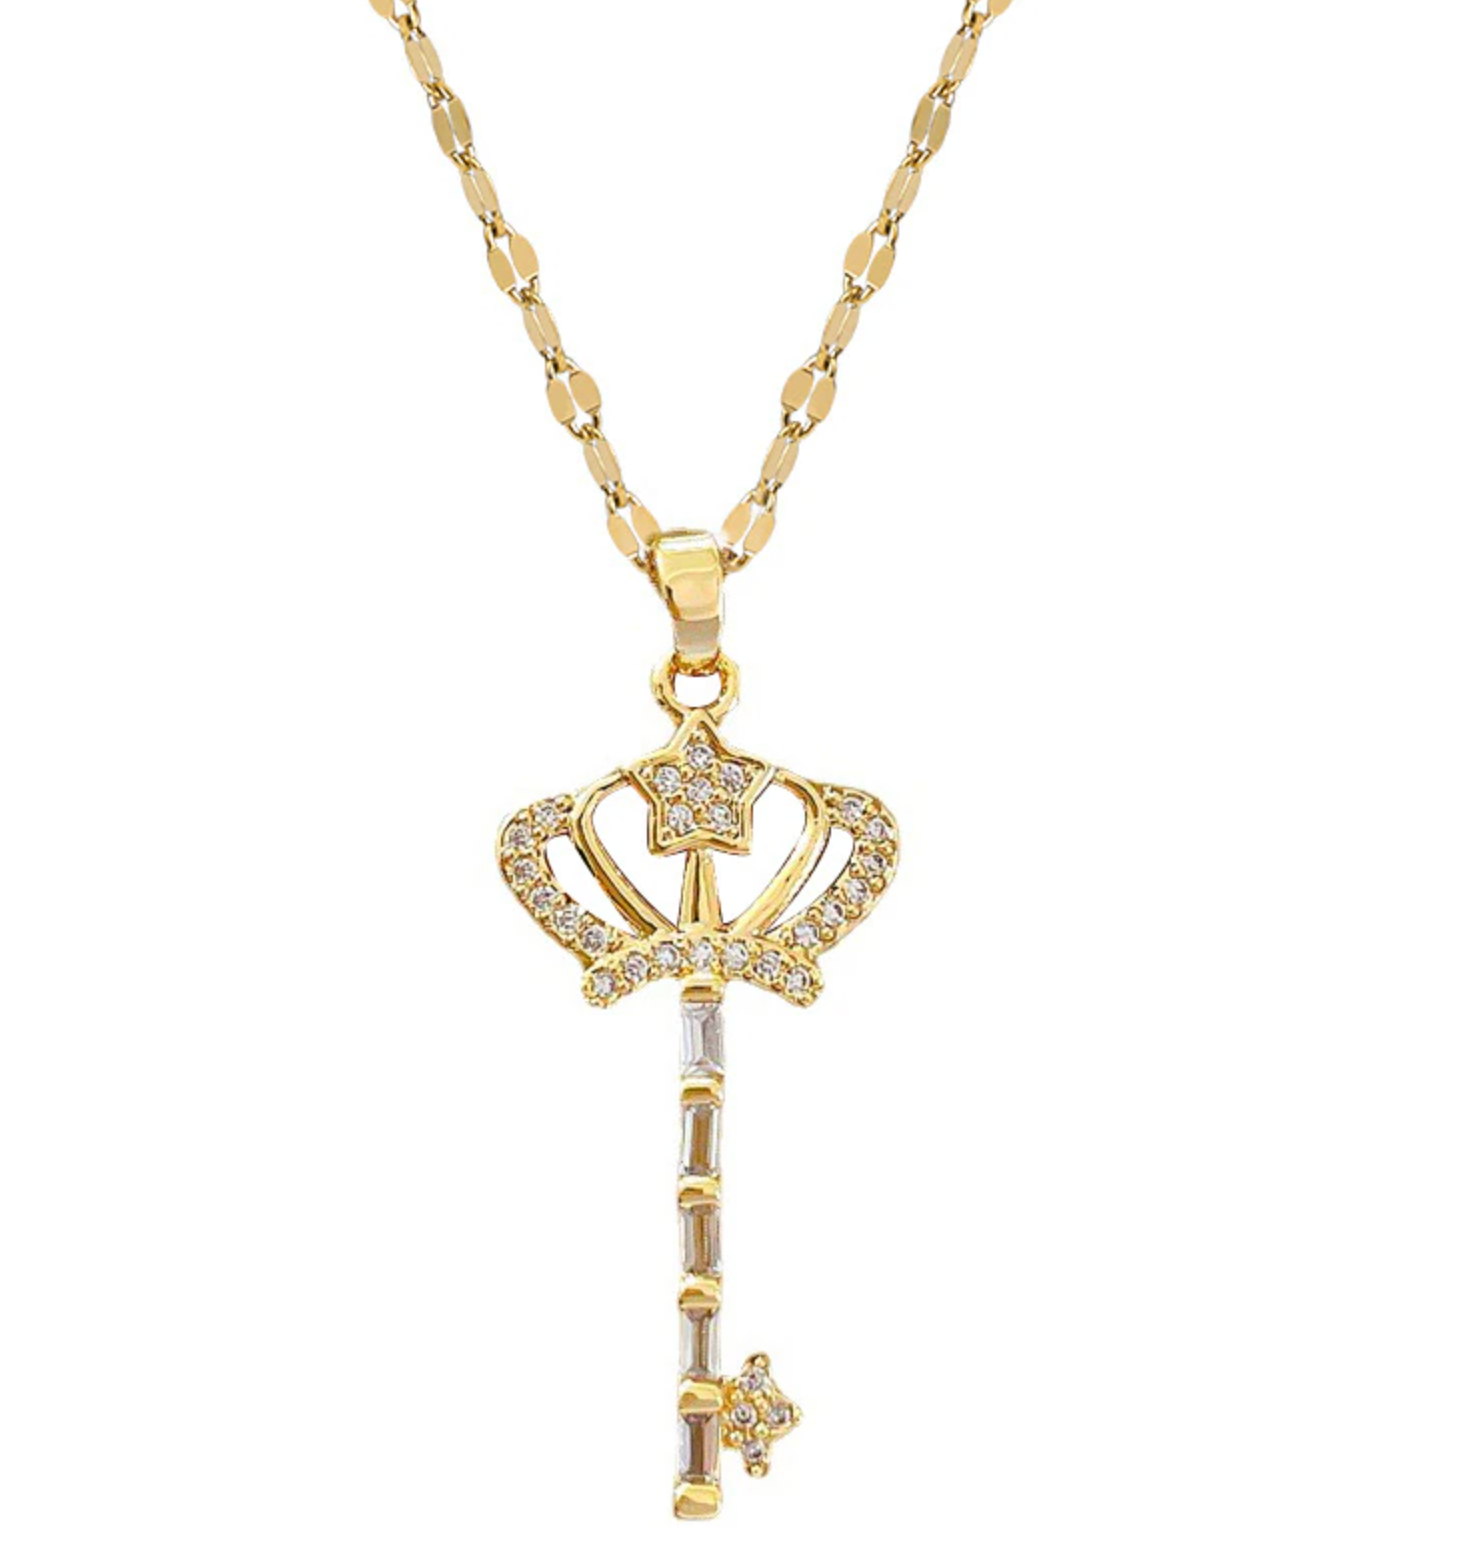 gold crown key necklace - bonafide glam